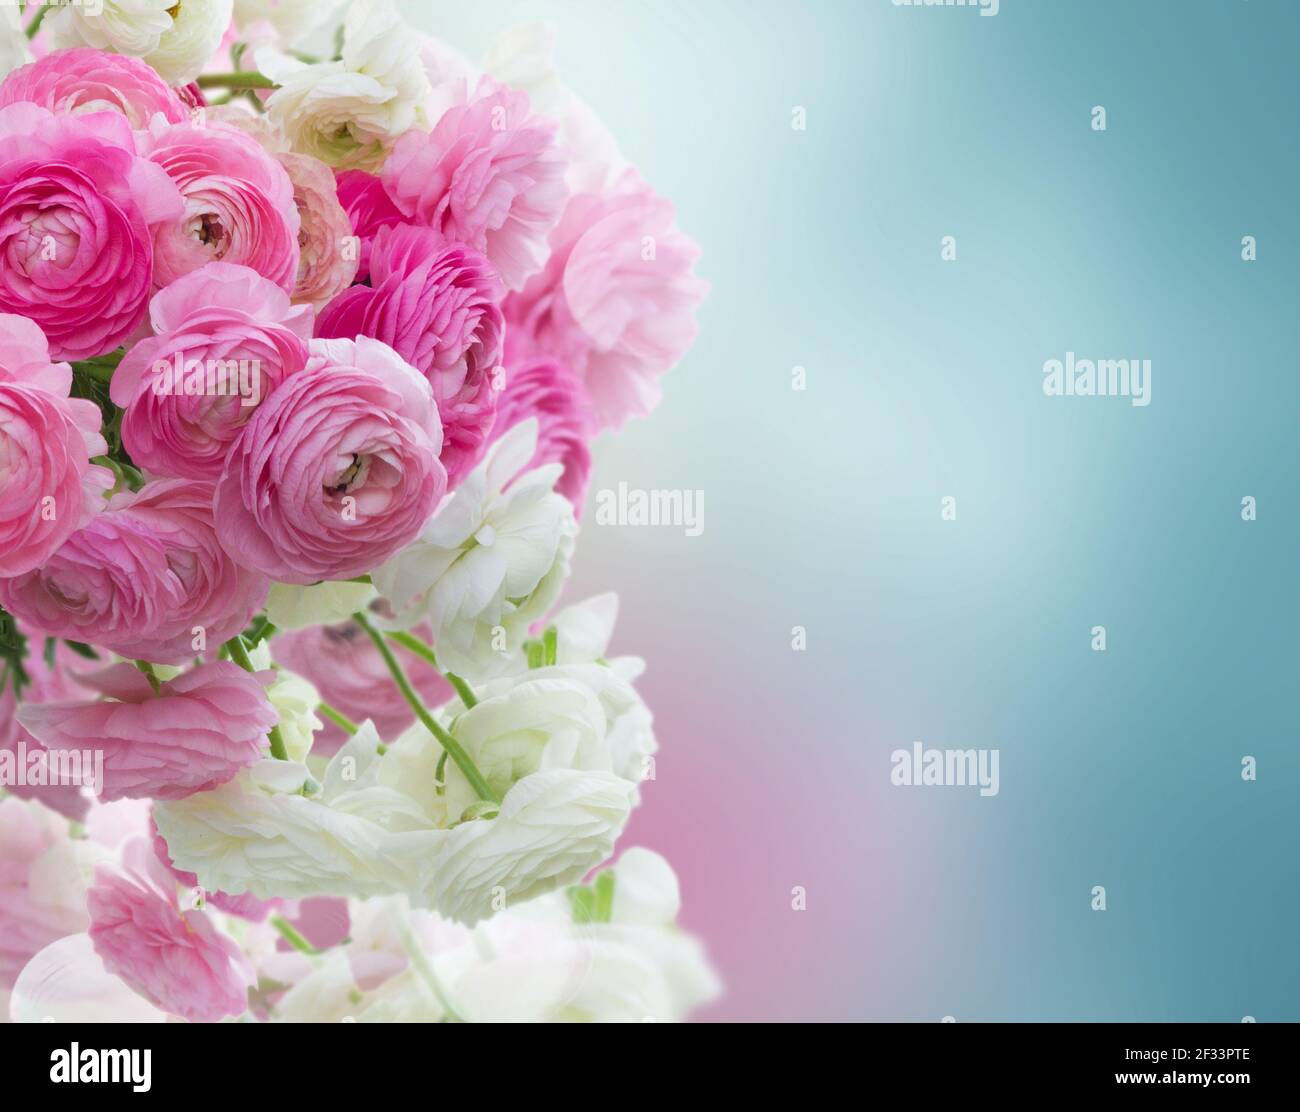 Fleurs renoncule rose et blanc Photo Stock - Alamy